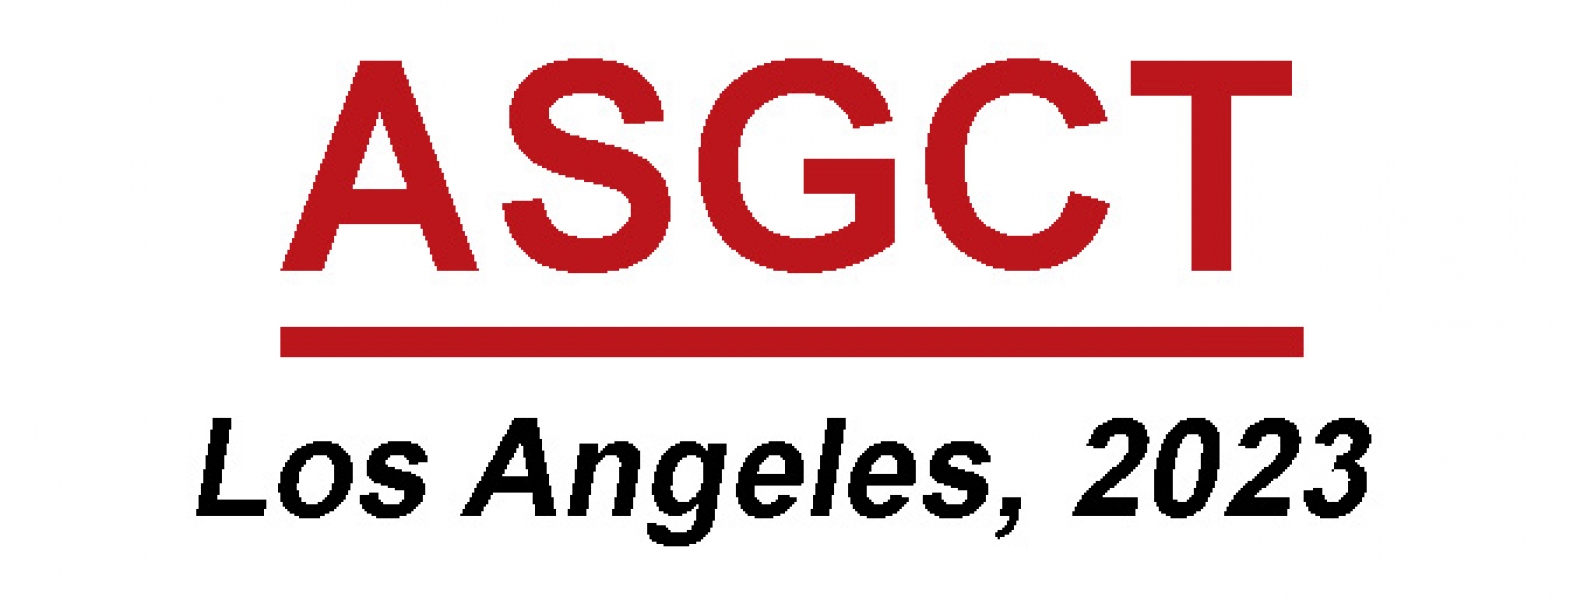 ASGCT Meeting Custom Booths Los Angeles 2023 RCS